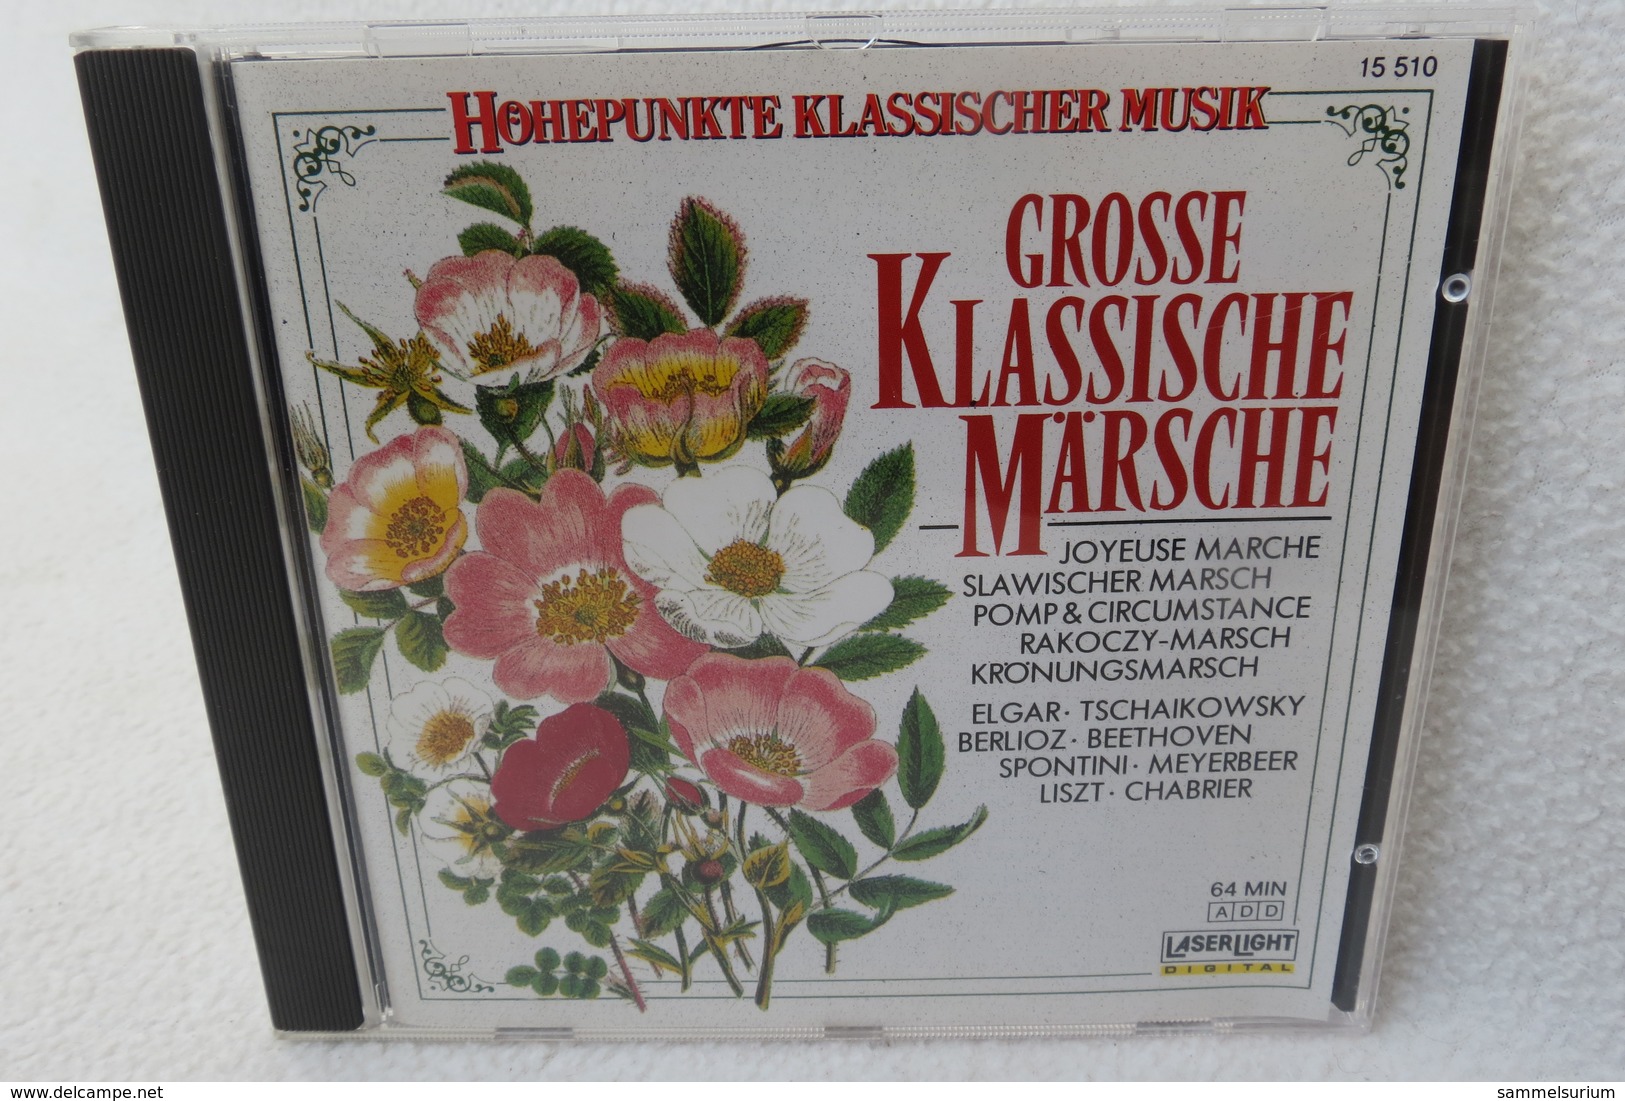 CD "Grosse Klassische Märsche" Aus Der Reihe Höhepunkte Klassischer Musik - Klassik